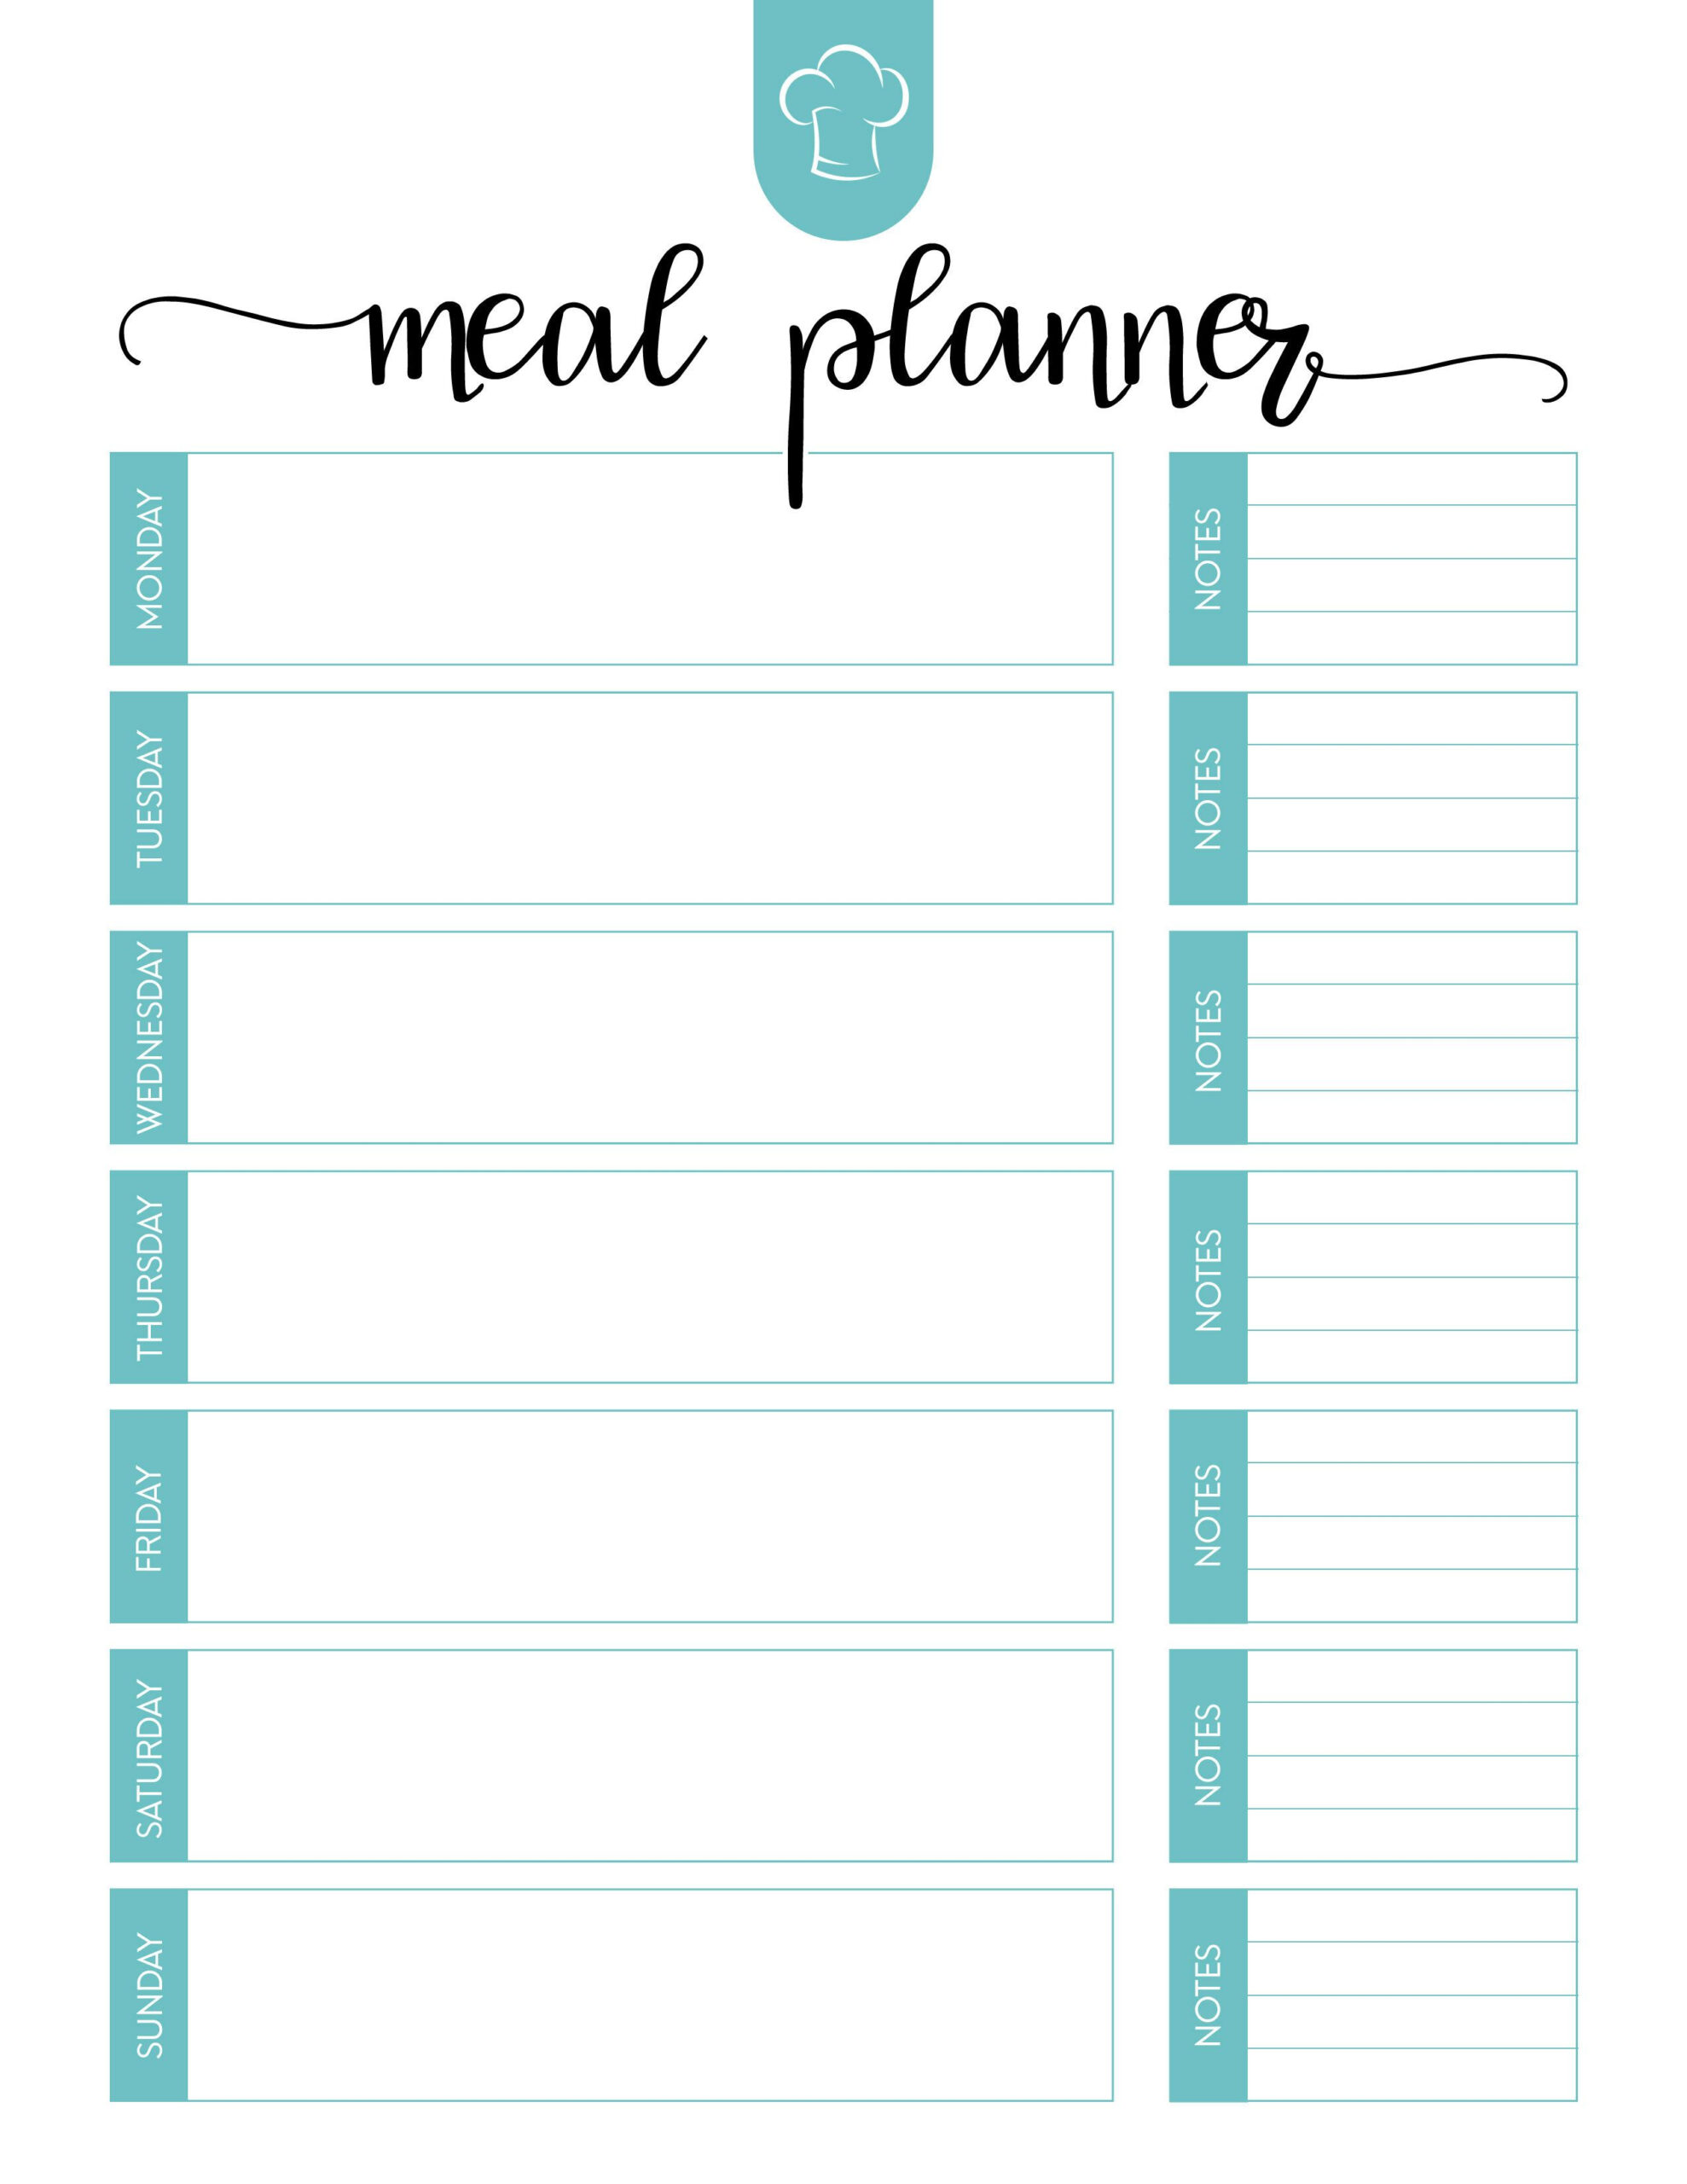 005 Free Menu Plan Template Unique Ideas Meal Planner Word Regarding Menu Planning Template Word